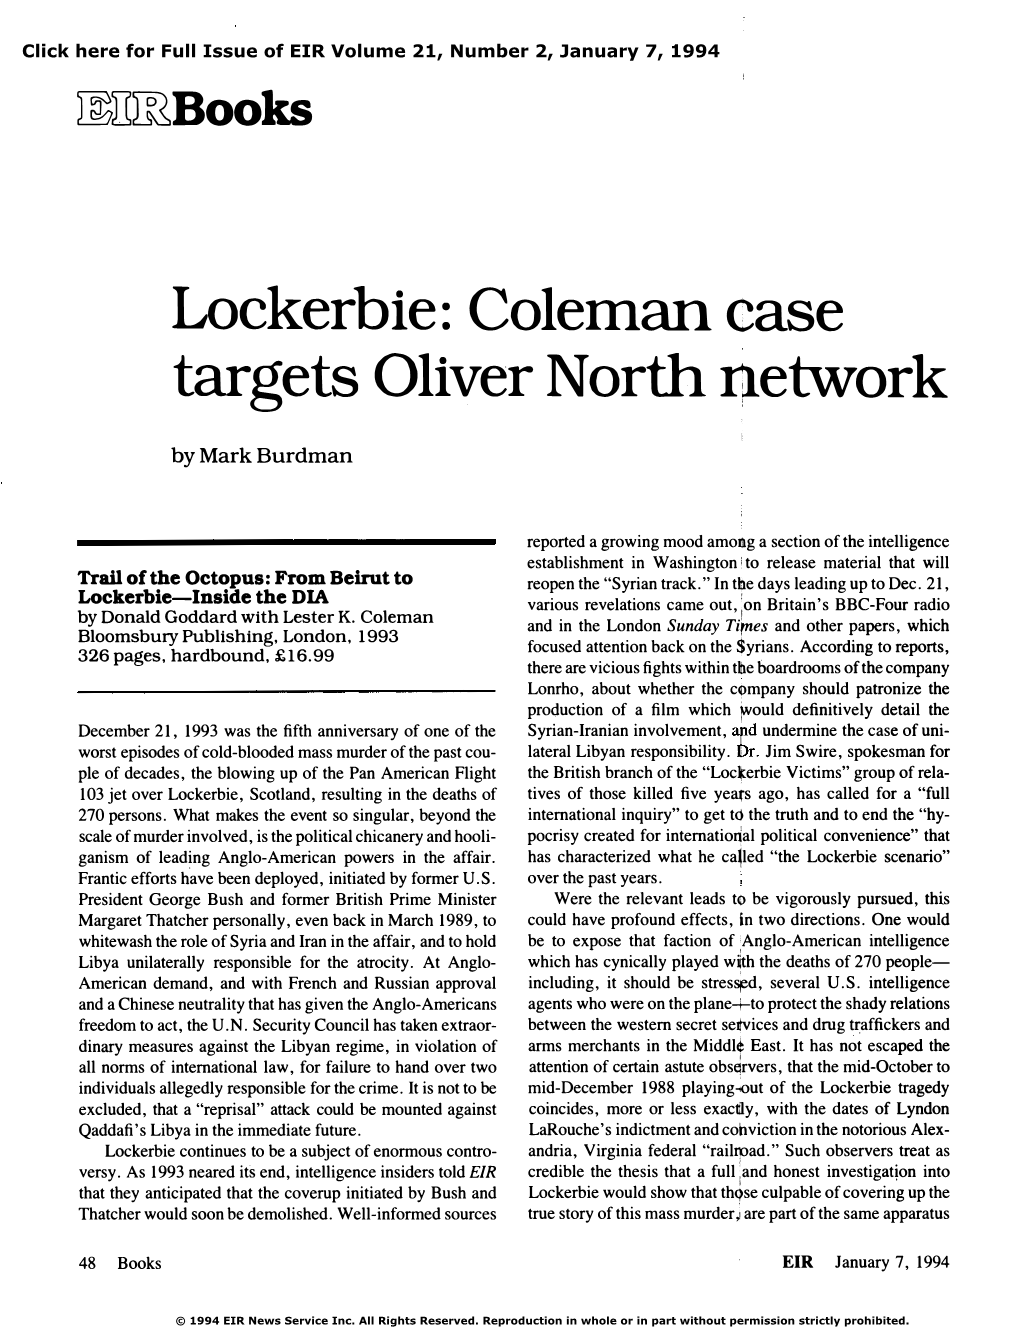 Lockerbie: Coleman Case Targets Oliver North Network